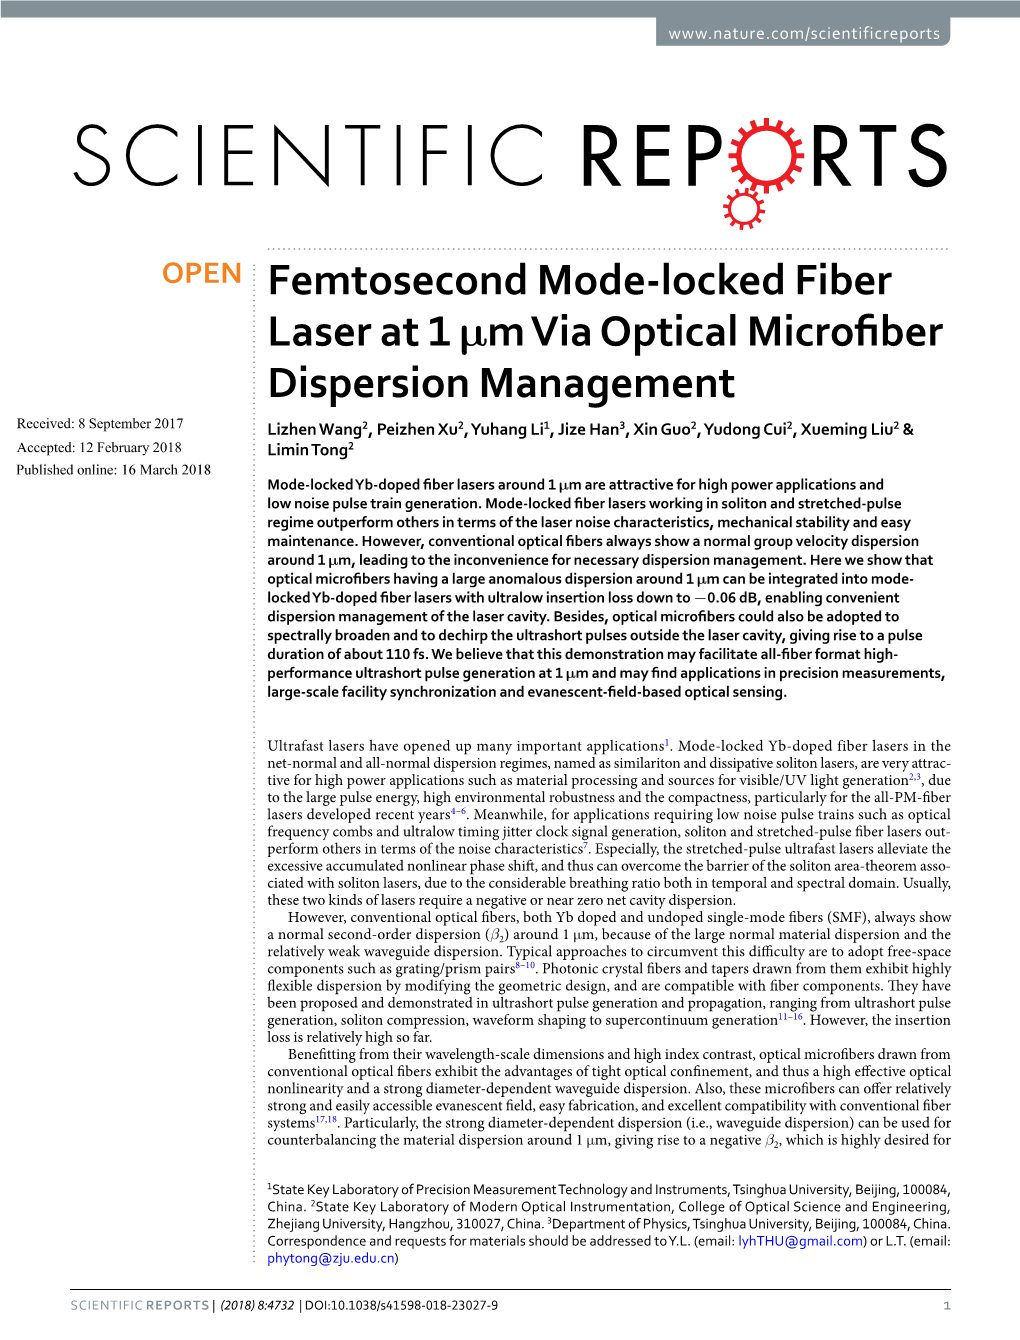 Femtosecond Mode-Locked Fiber Laser at 1 Μm Via Optical Microfiber